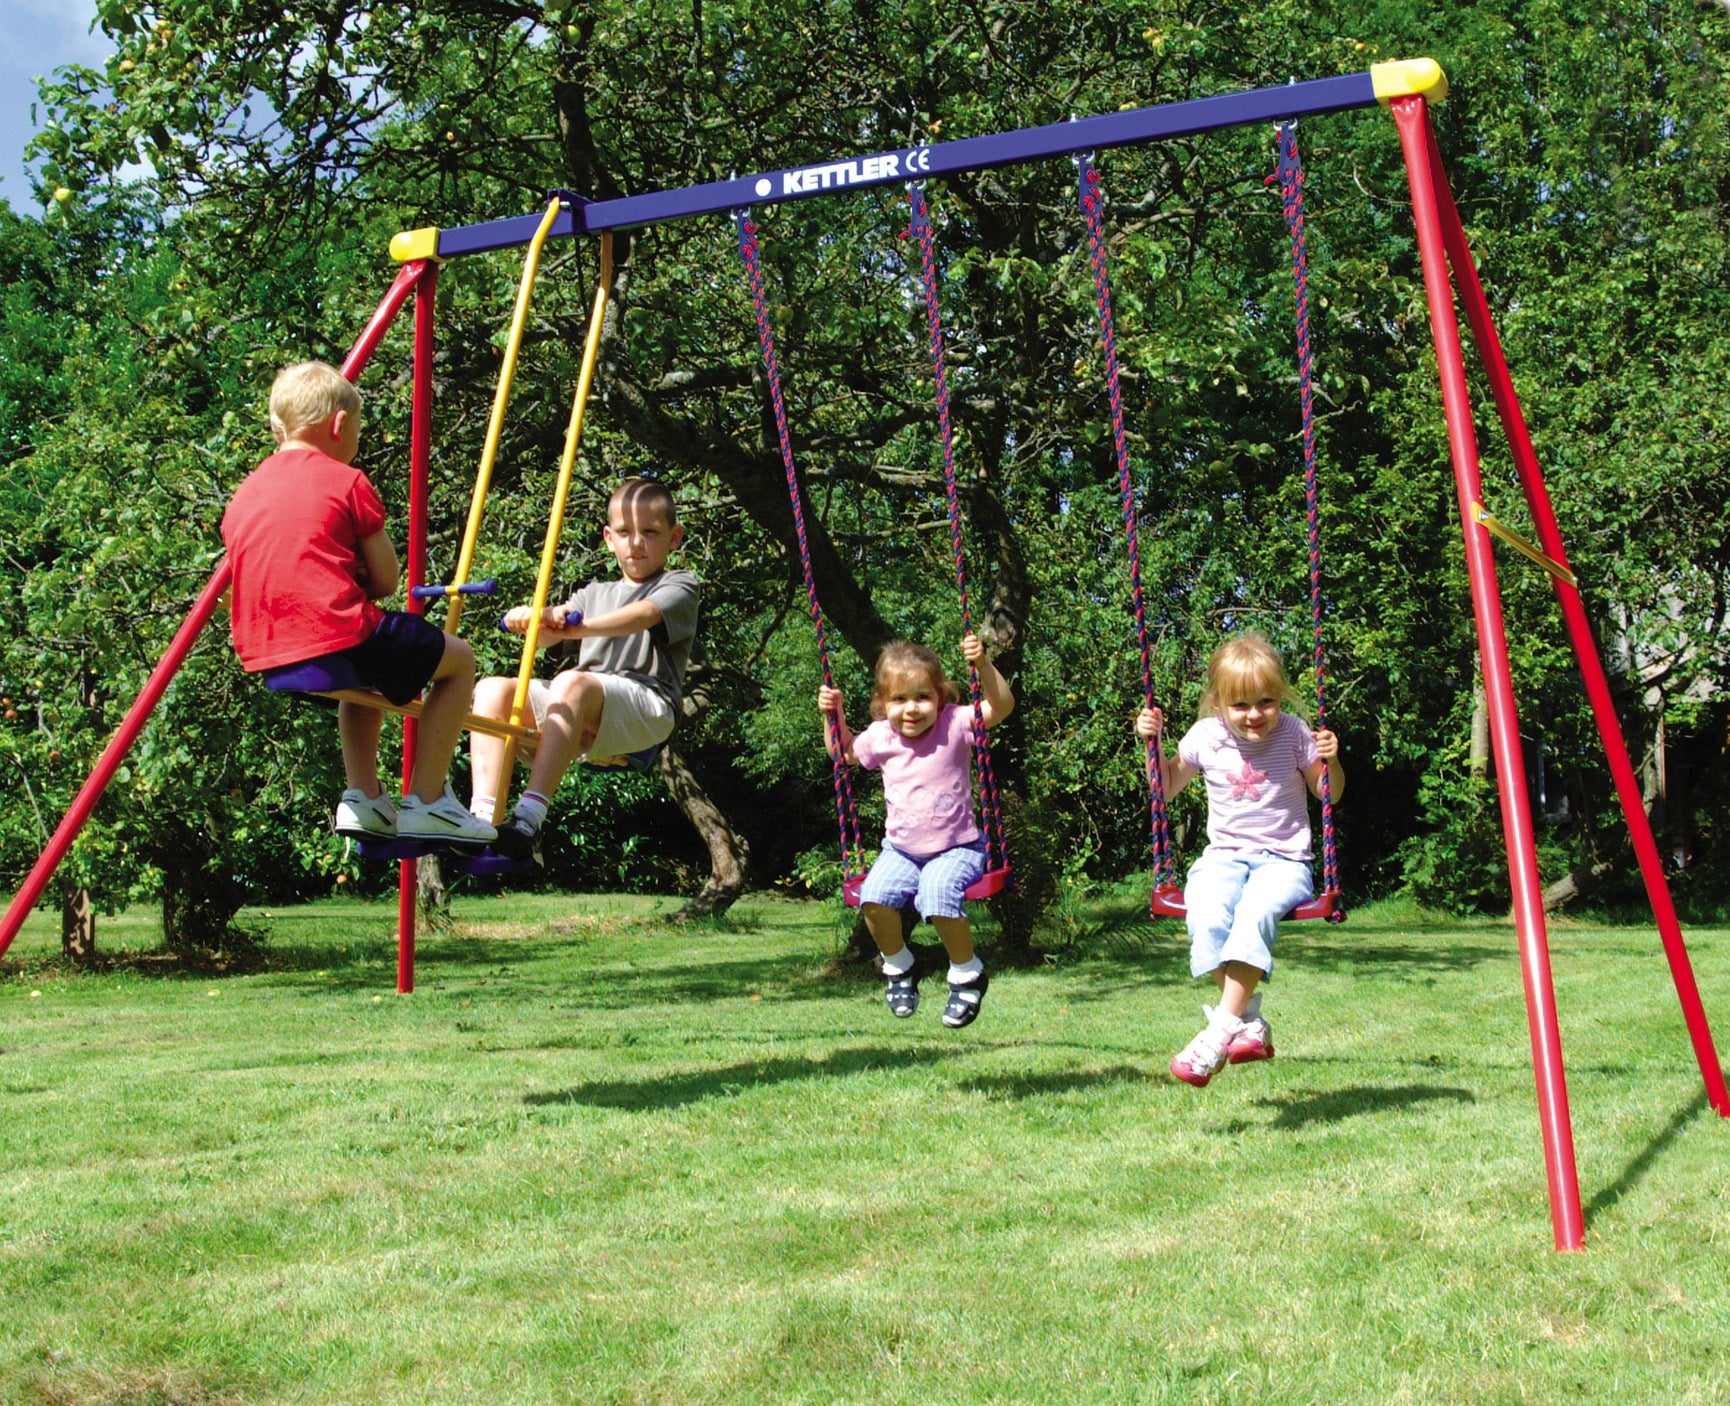 Children playing on the KETTLER Multi-Play Swingset Bundle